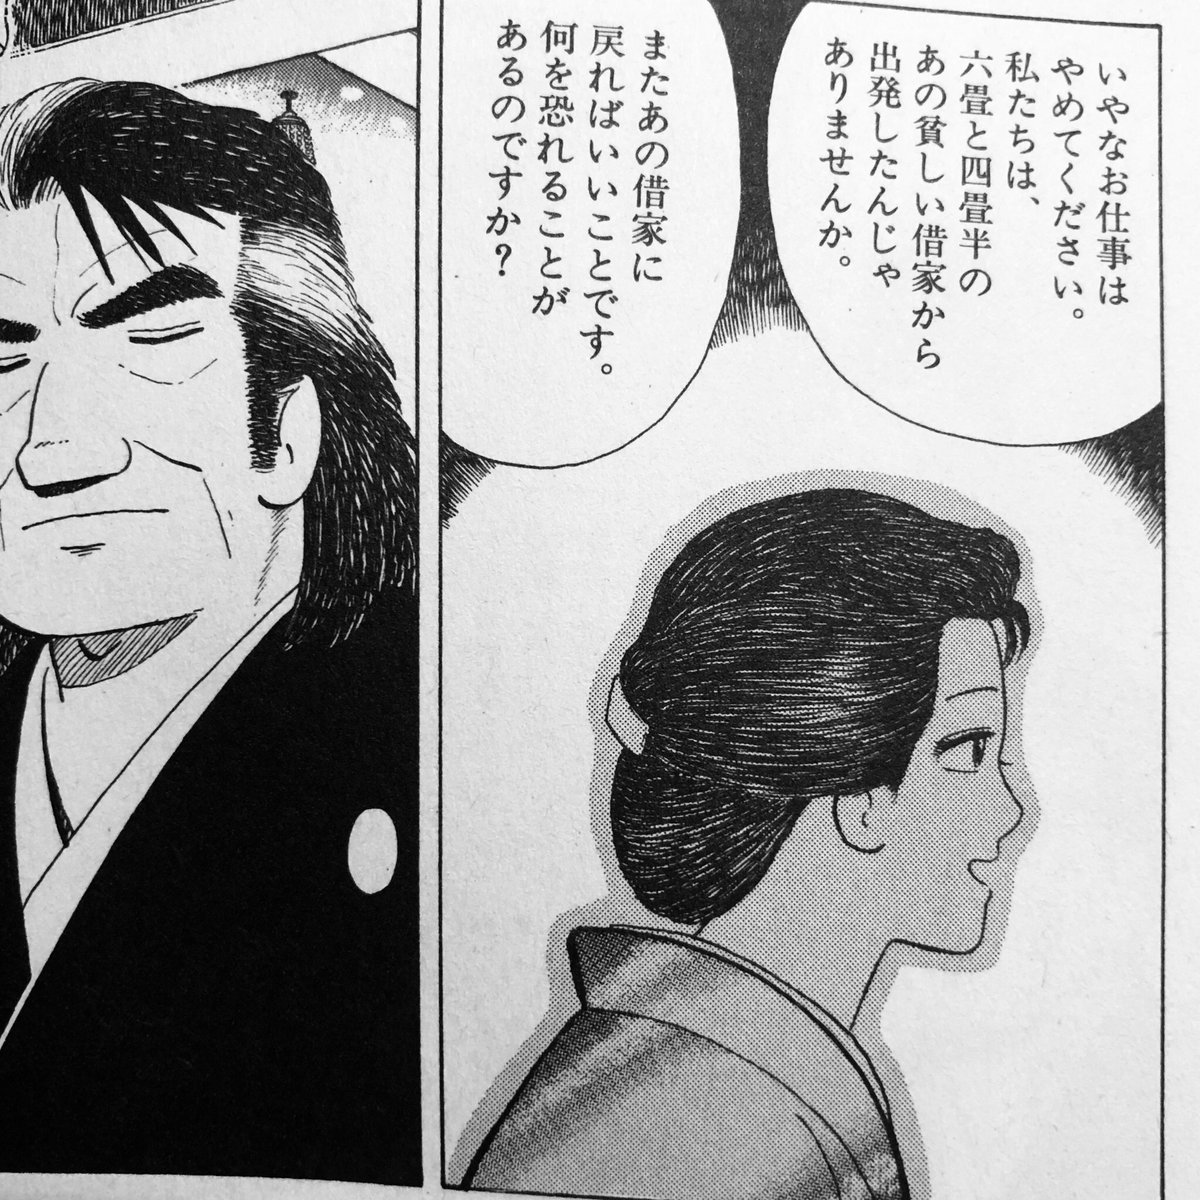 Shimako 47巻に山岡母の横顔が一コマだけ出ています 確かに栗田さん似 今出てる最新刊 福島編 に若い時の母出てますが う ん